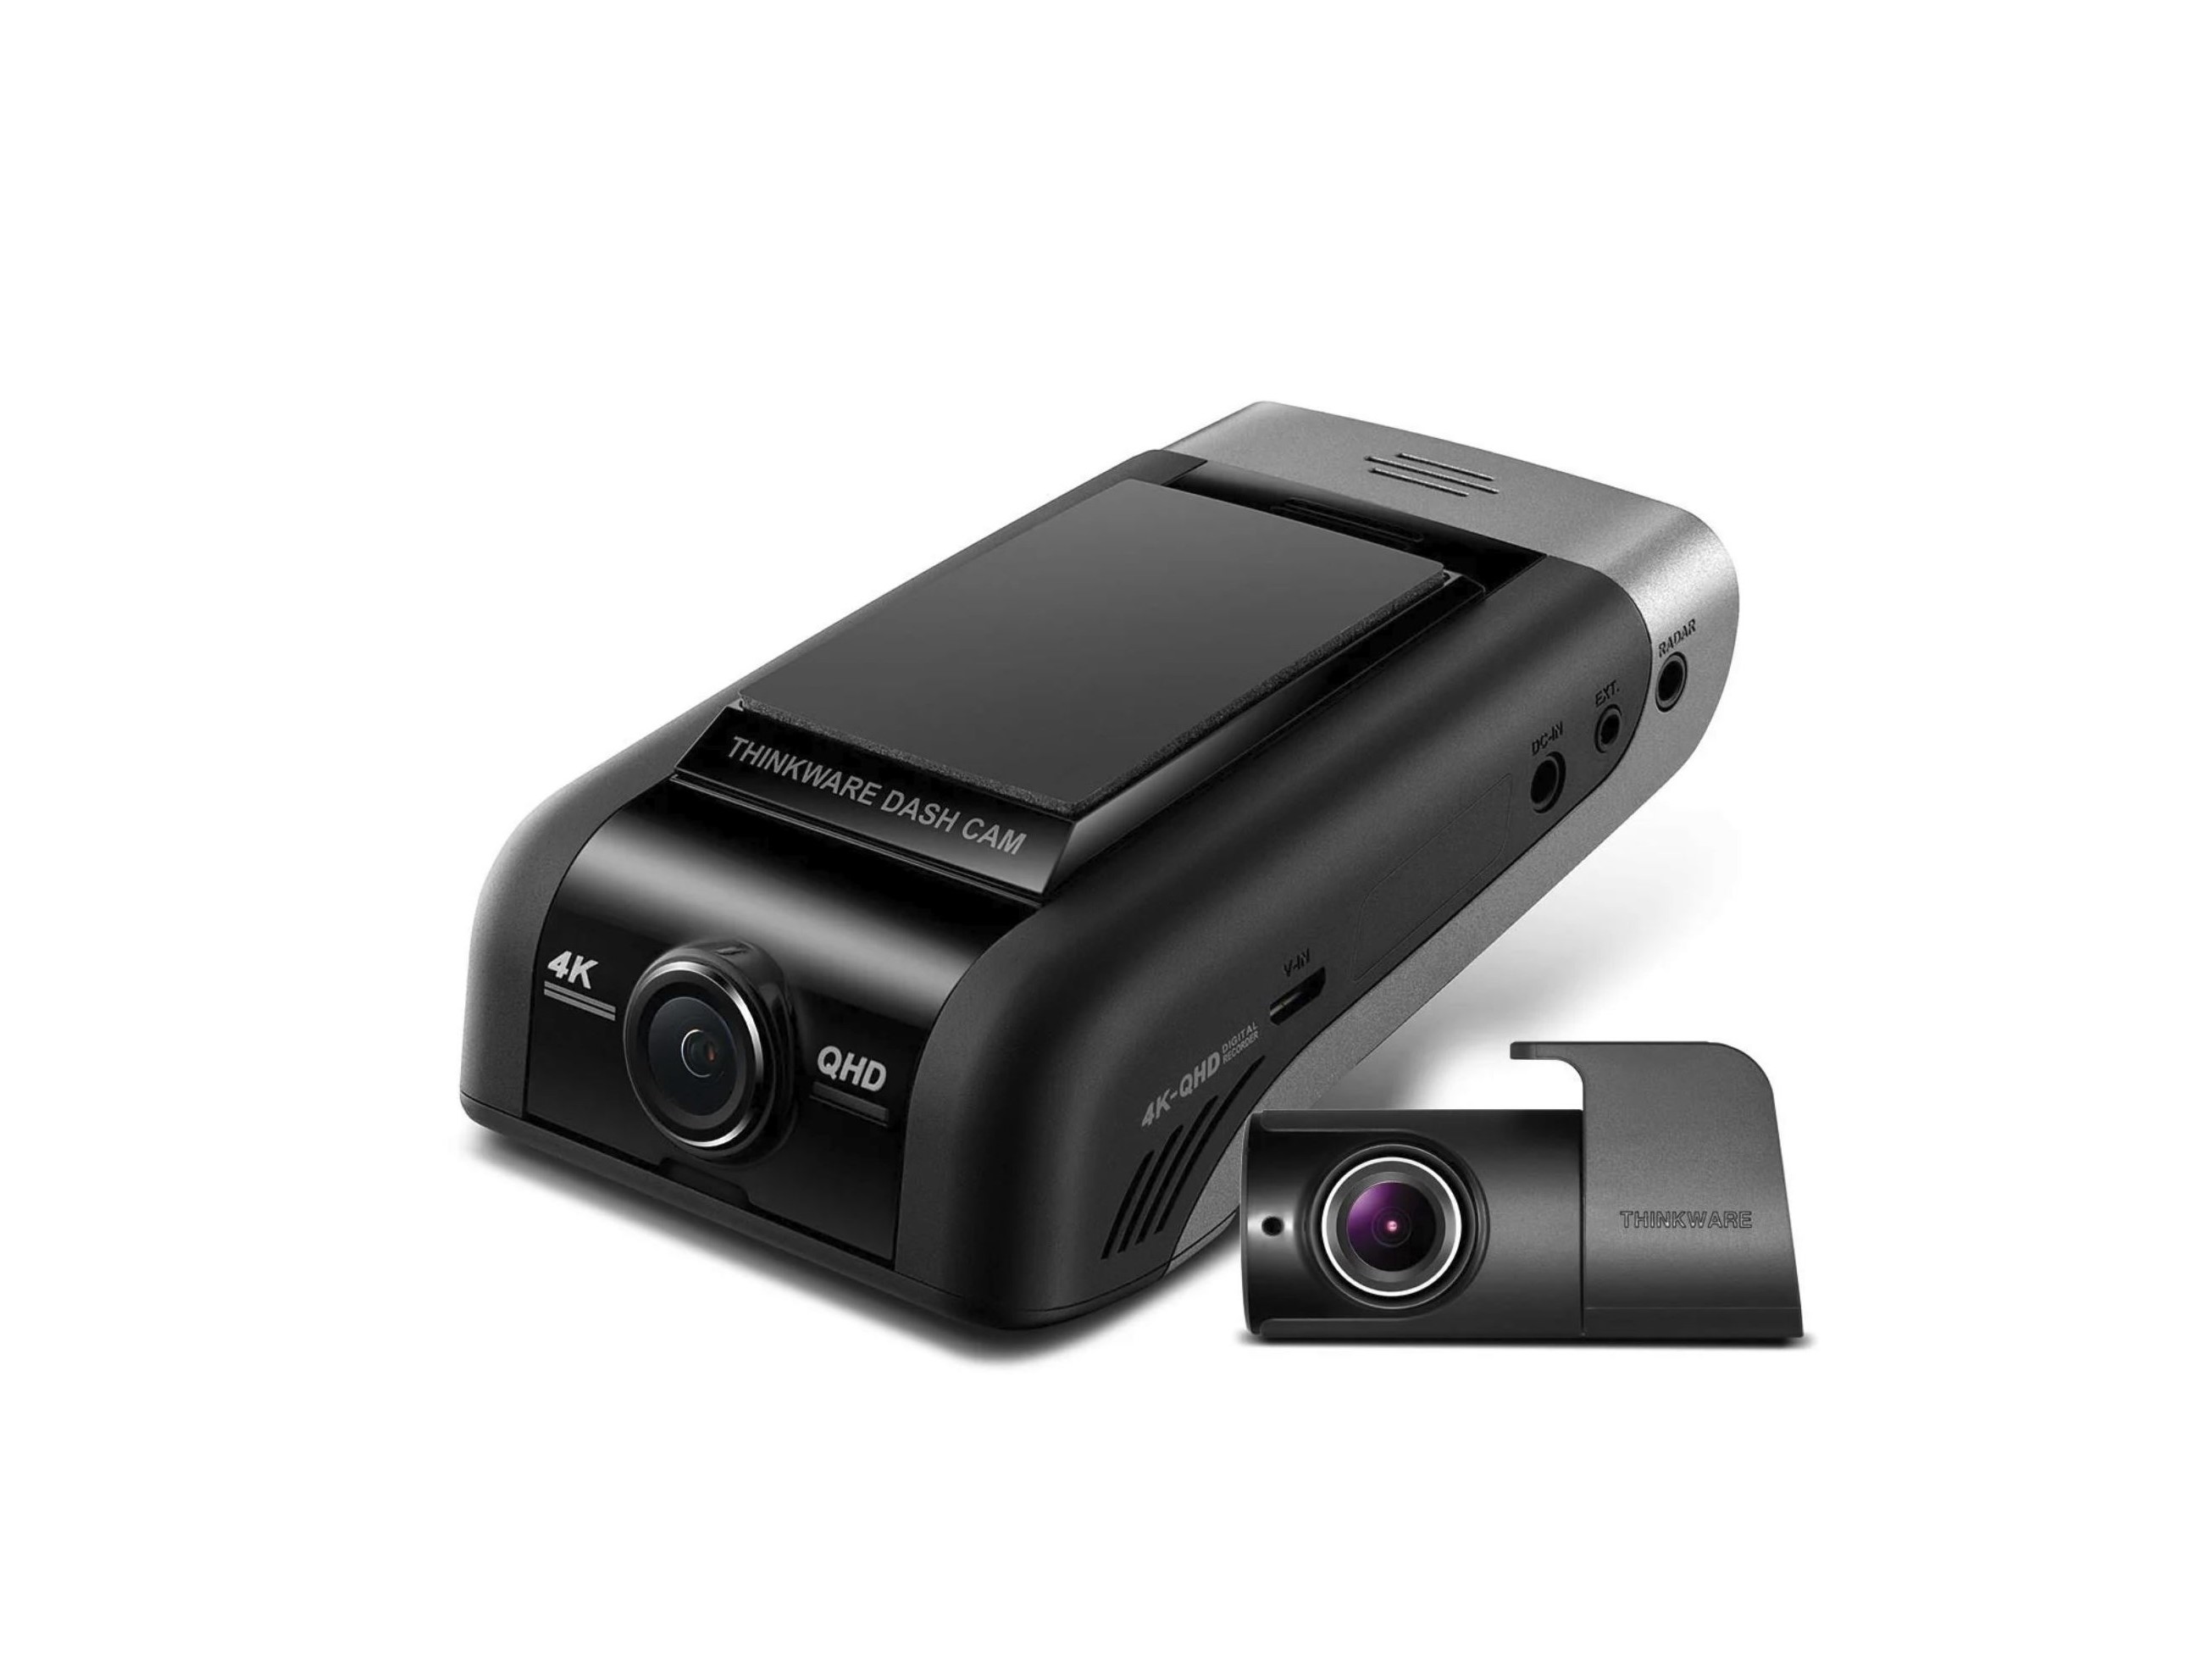 https://www.digitaltrends.com/wp-content/uploads/2023/04/Thinkware-U1000-4k-dashcam-and-rear-camera-kit.jpg?fit=720%2C539&p=1